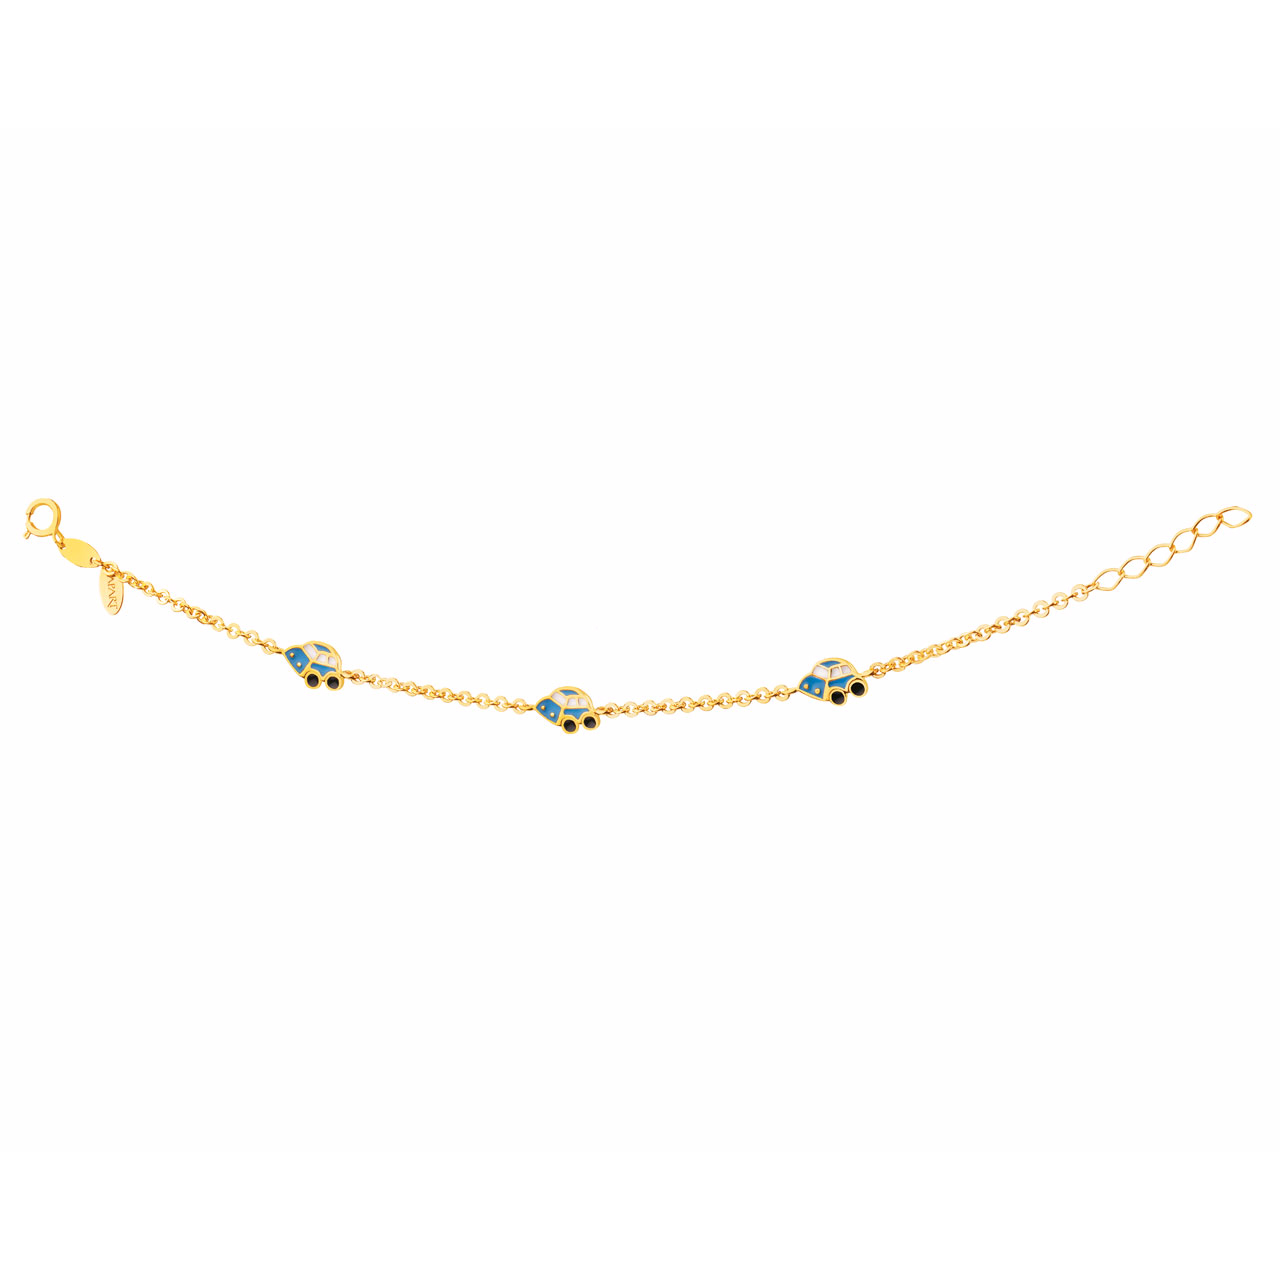 Wholesale 14k 18k OEM/ODM Jewelry gold Bracelet make custom designed jewelry manufacturer